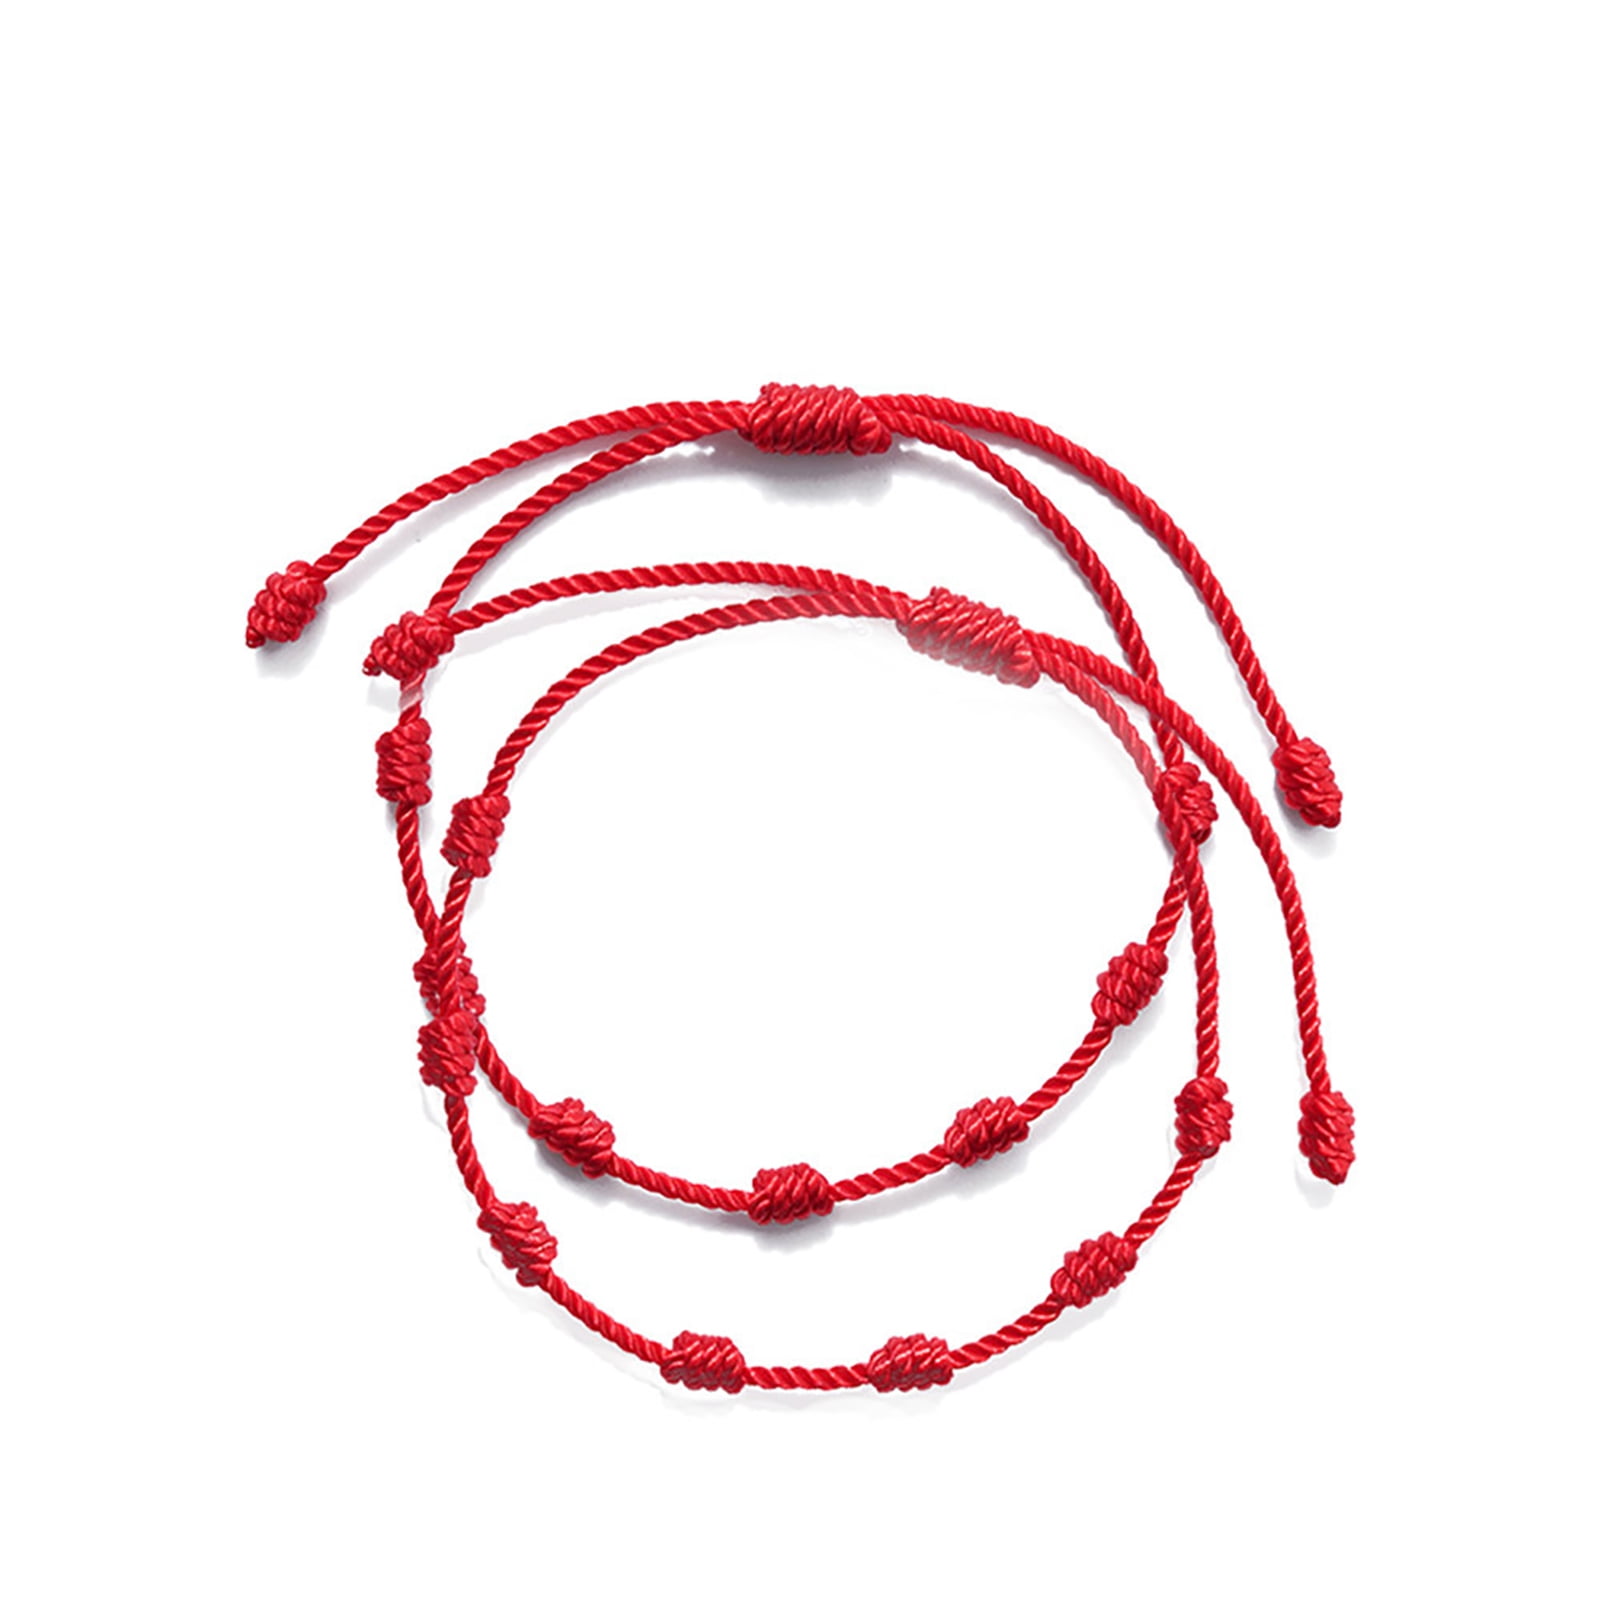 Linashi 6pcs Lucky Bracelets Red Bracelet Red Cord Bracelet Red Knot Bracelet for Protection Good Luck for Friendship, Women's, Size: One Size